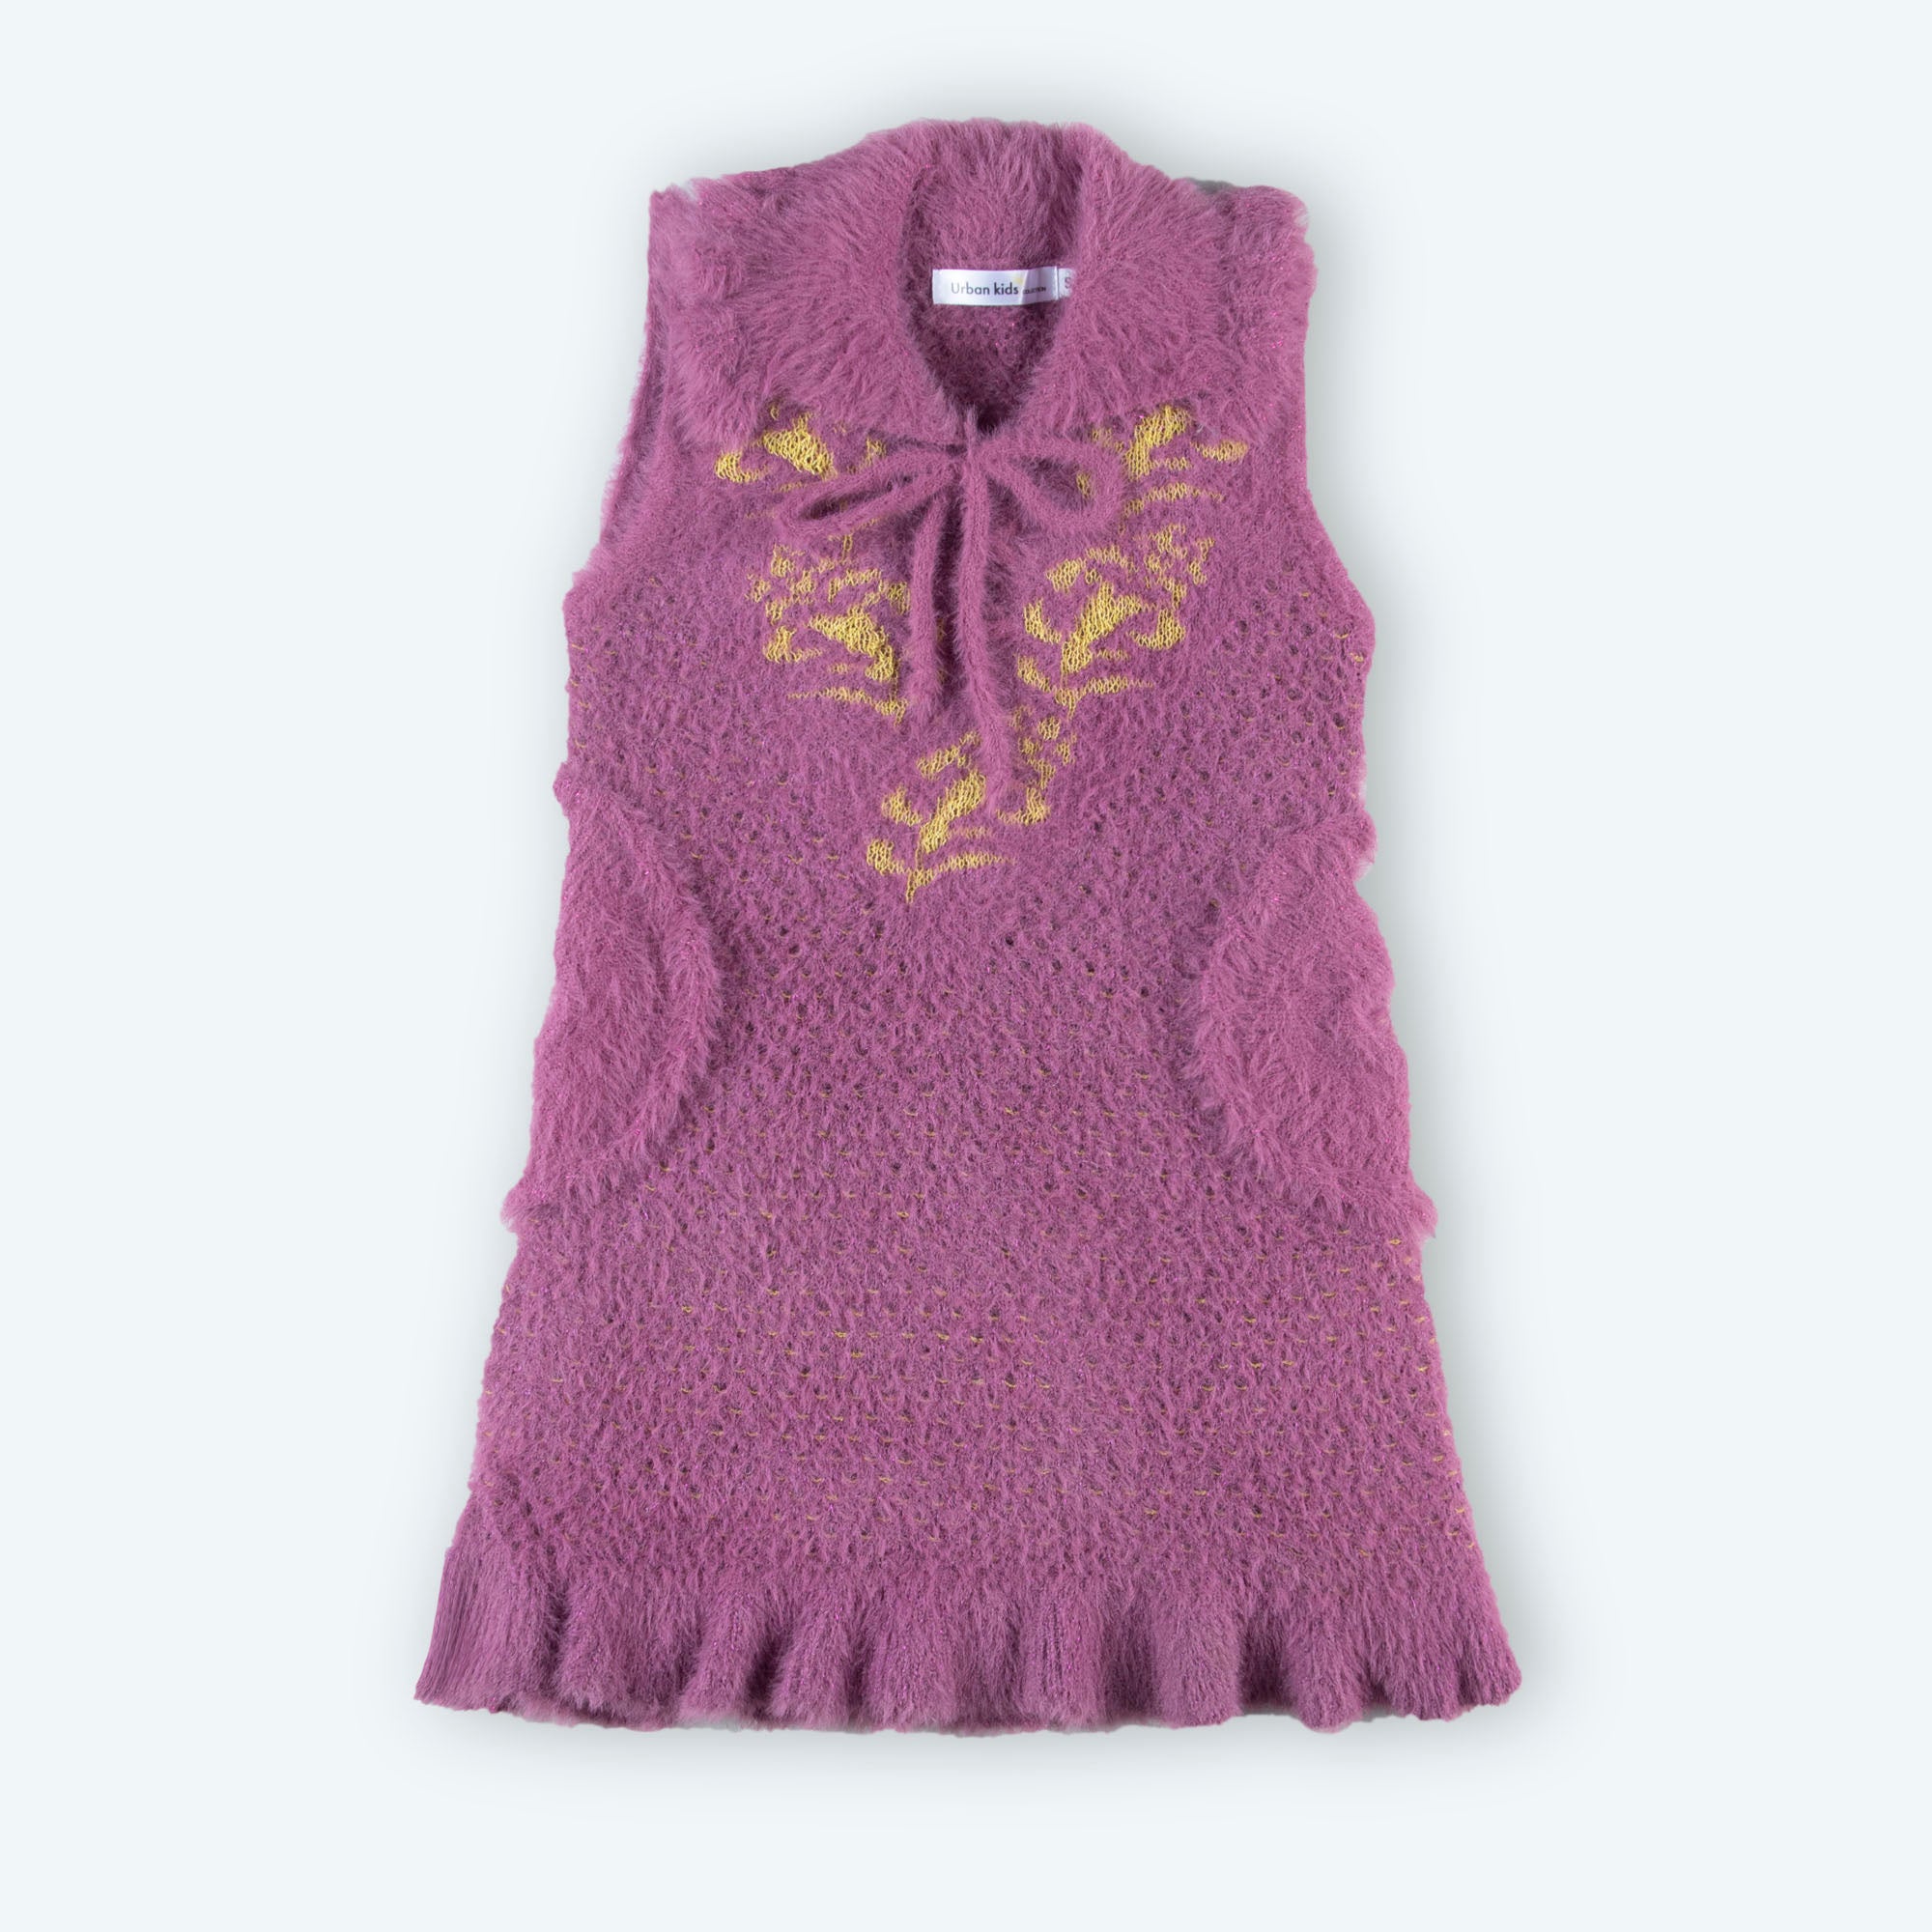 Purple Knit Dress up